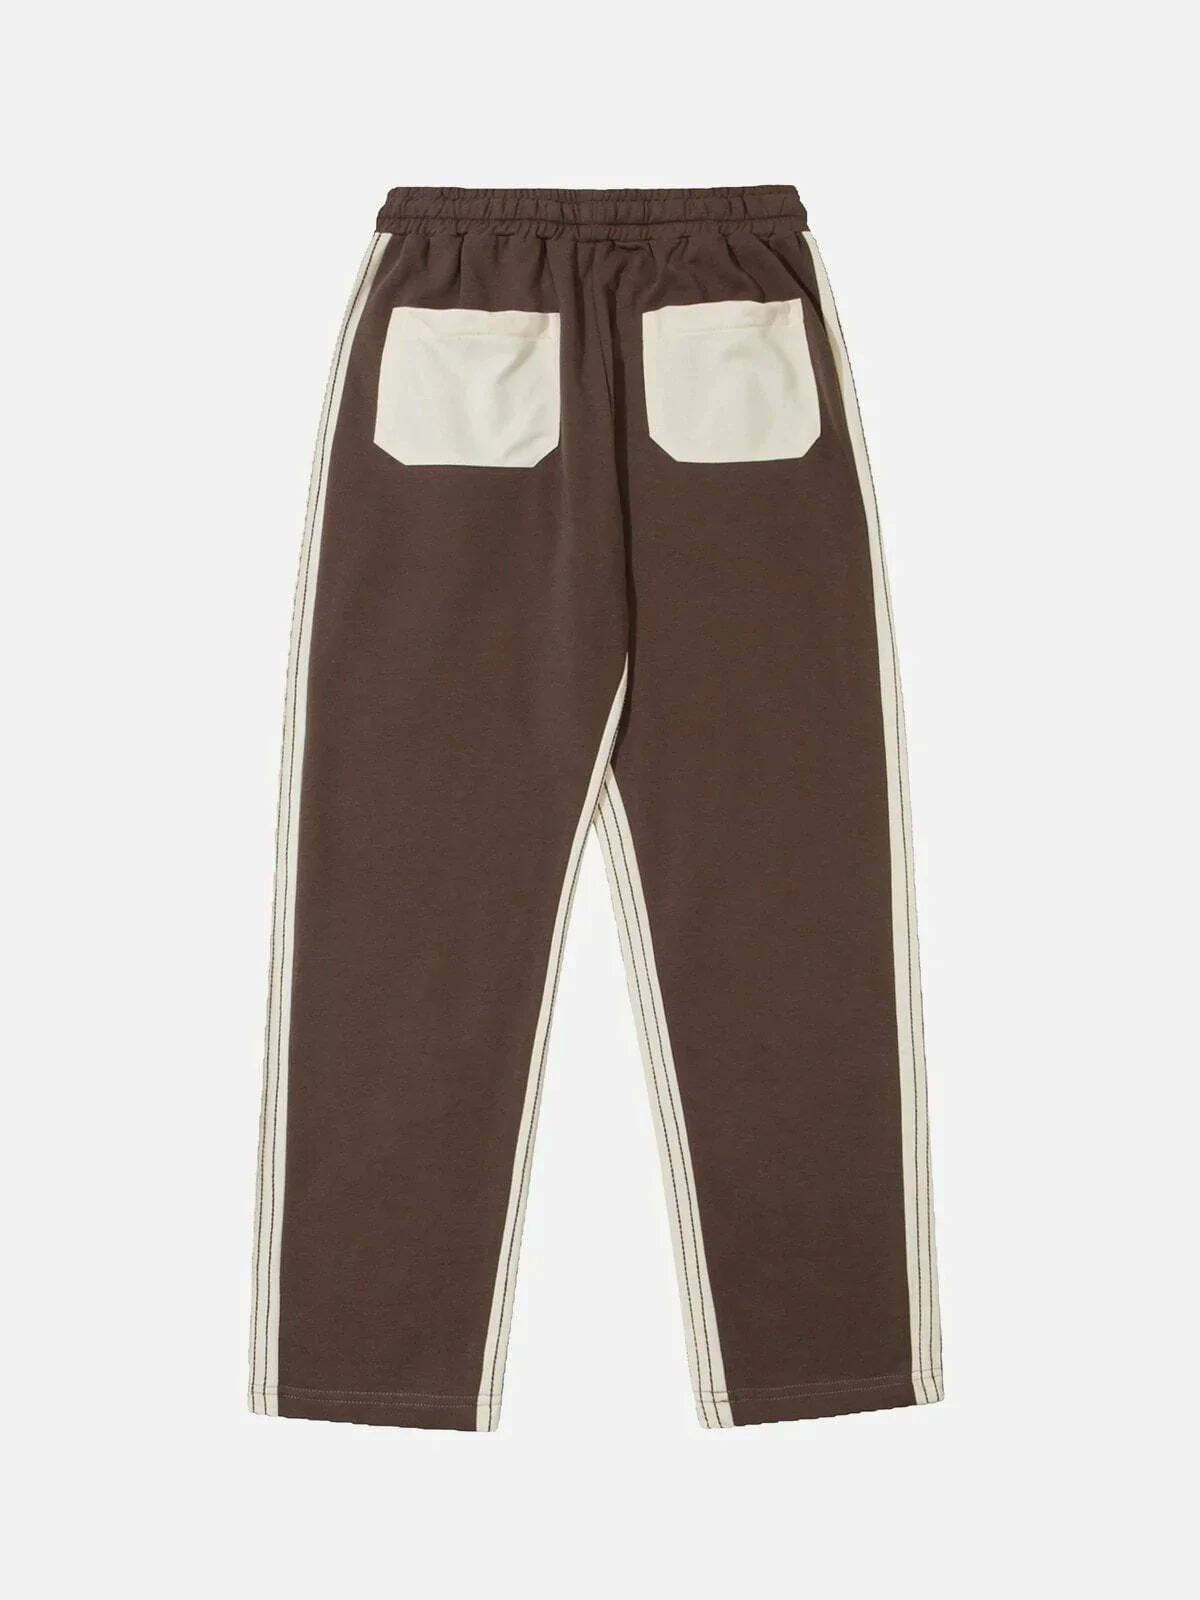 trendy terry sweatpants edgy sidestripe design 8368